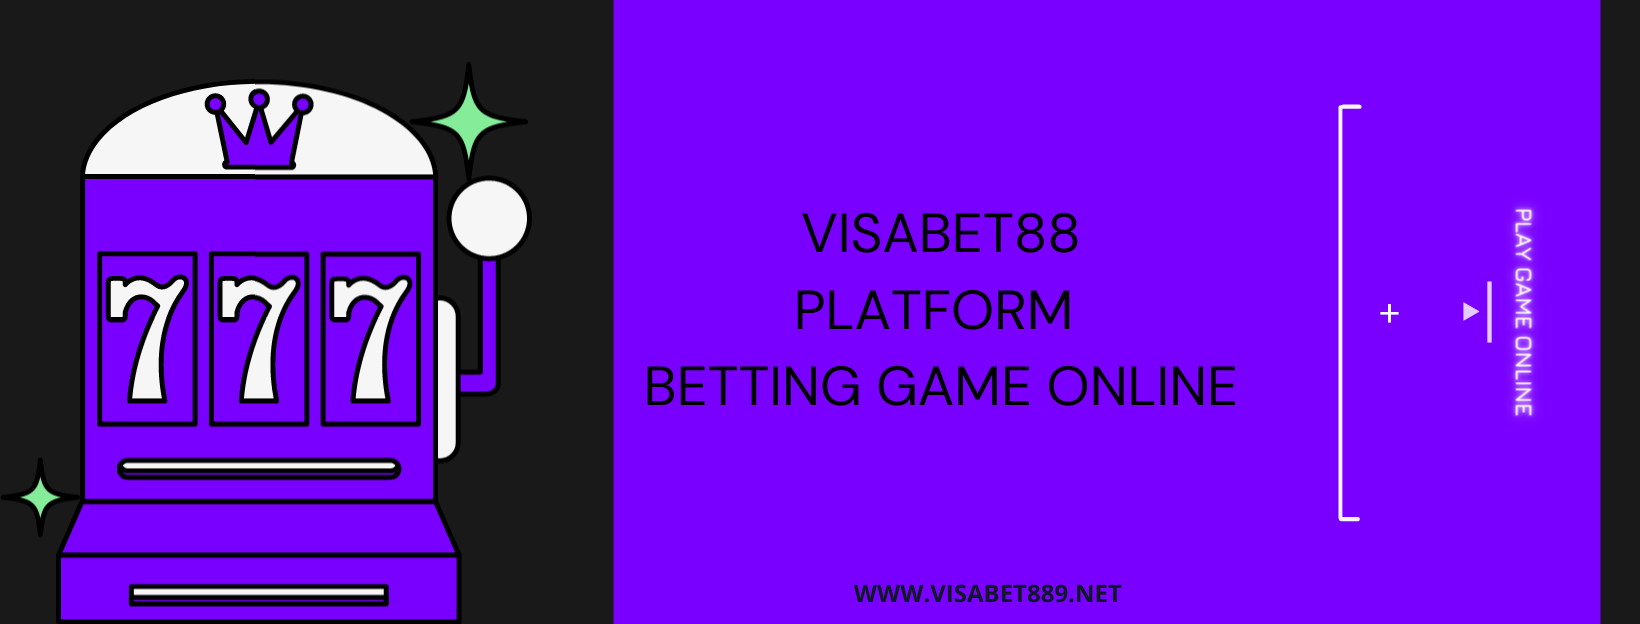 casino slots Visabet88